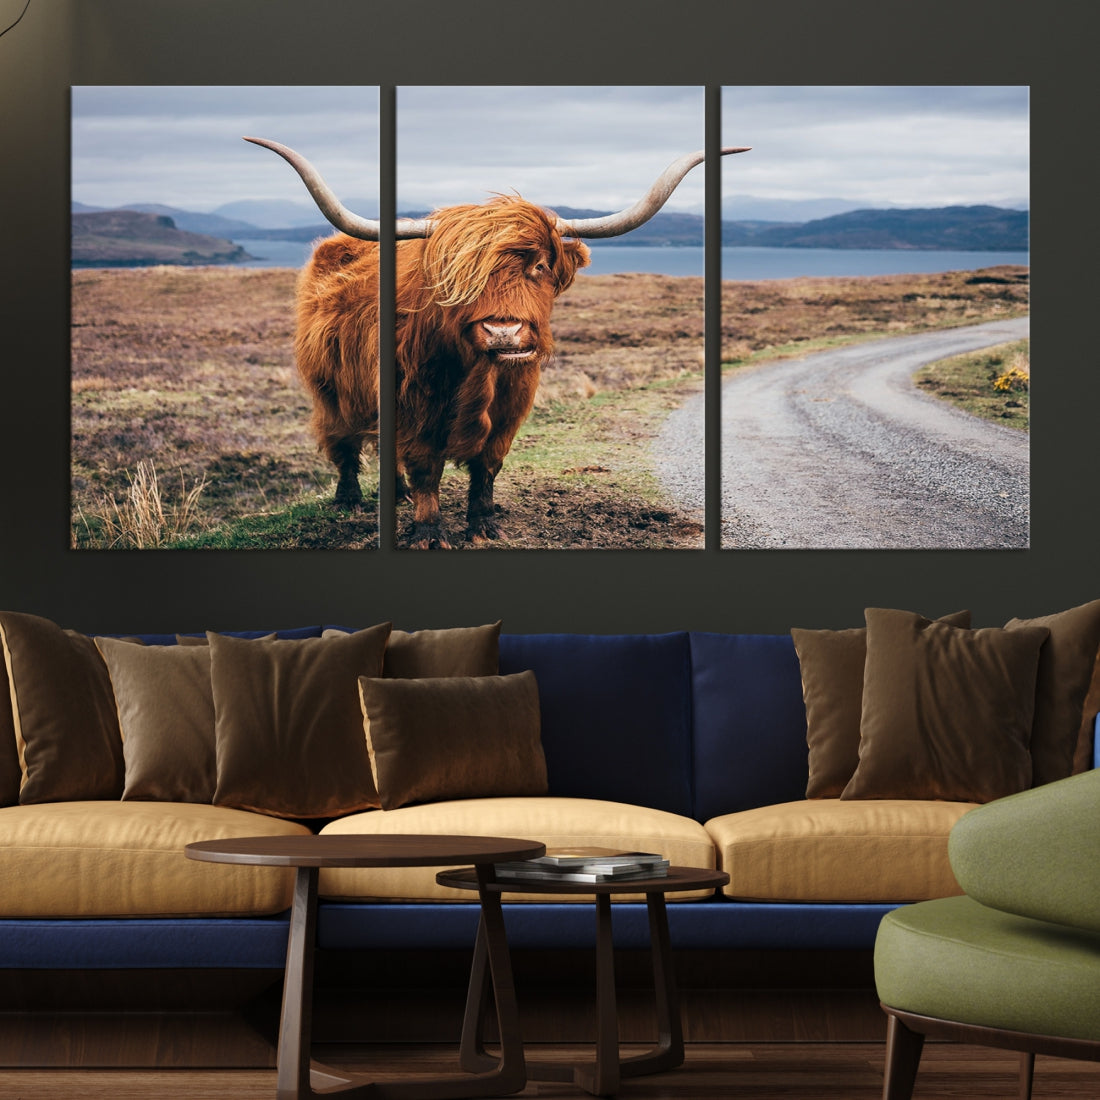 Highland Cow with Big Horn Canvas Wall Art Animal Photo Print Wall Decor